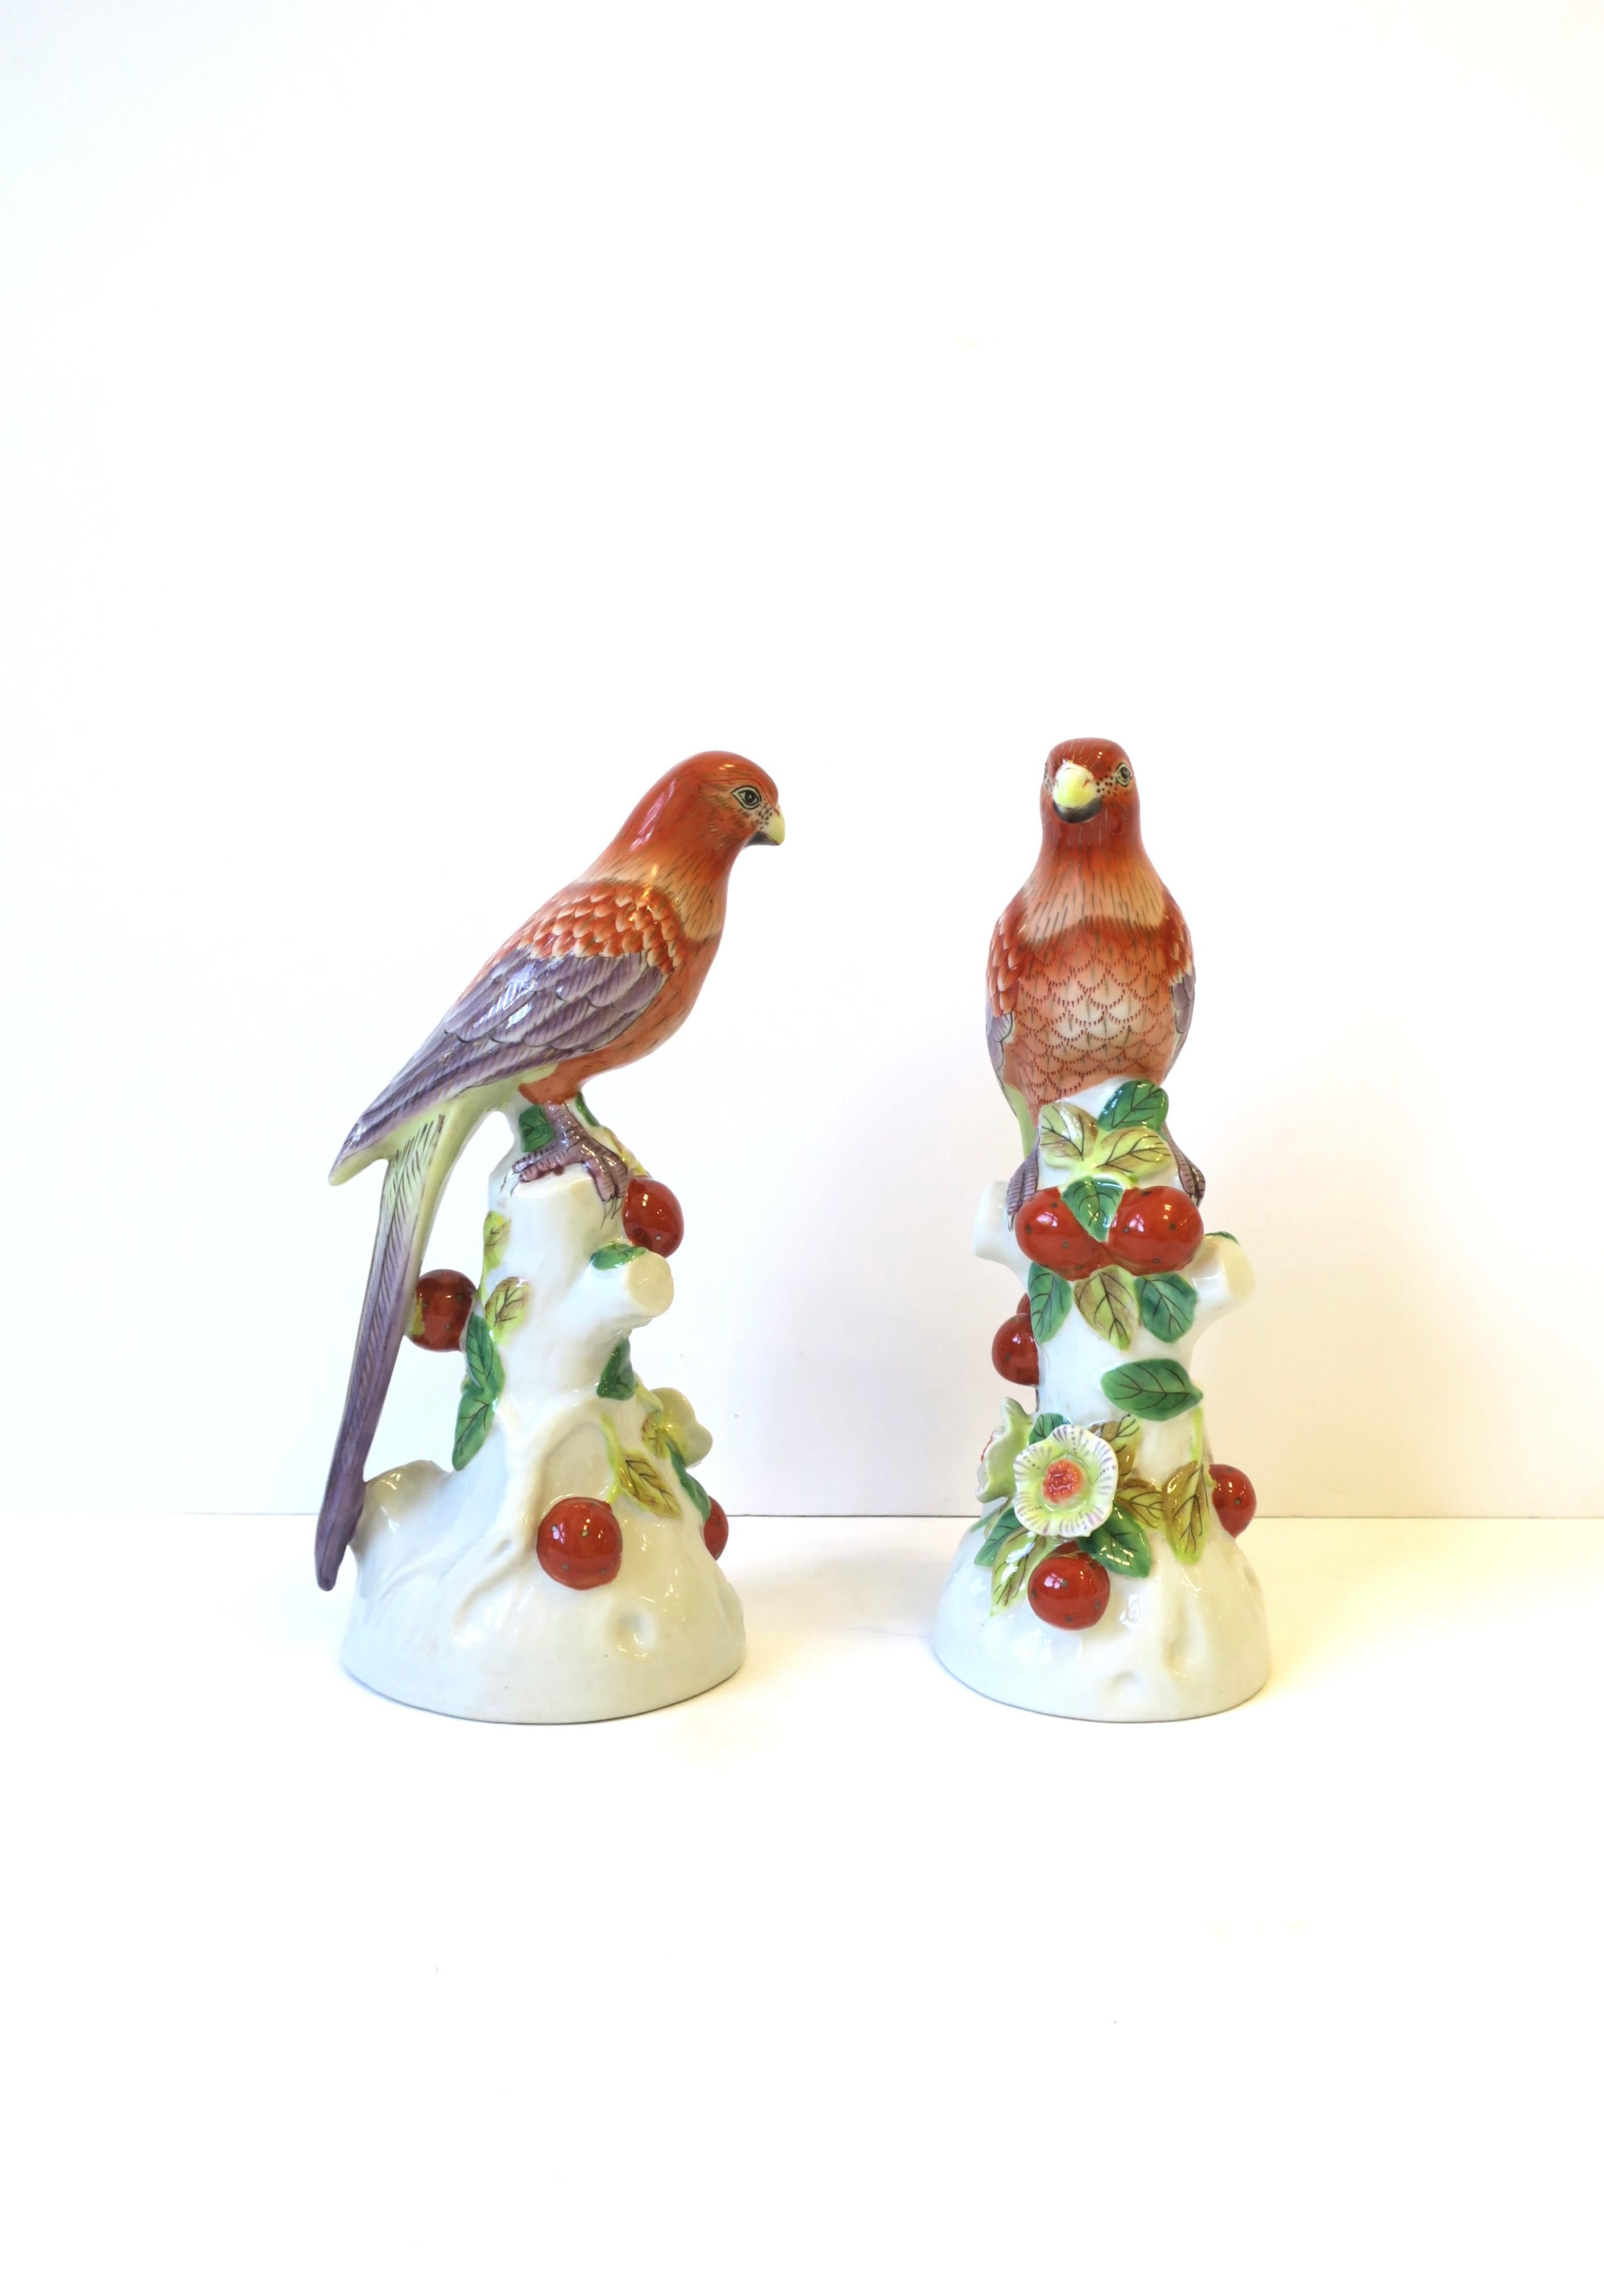 20th Century Ceramic Birds Decorative Objects, Pair